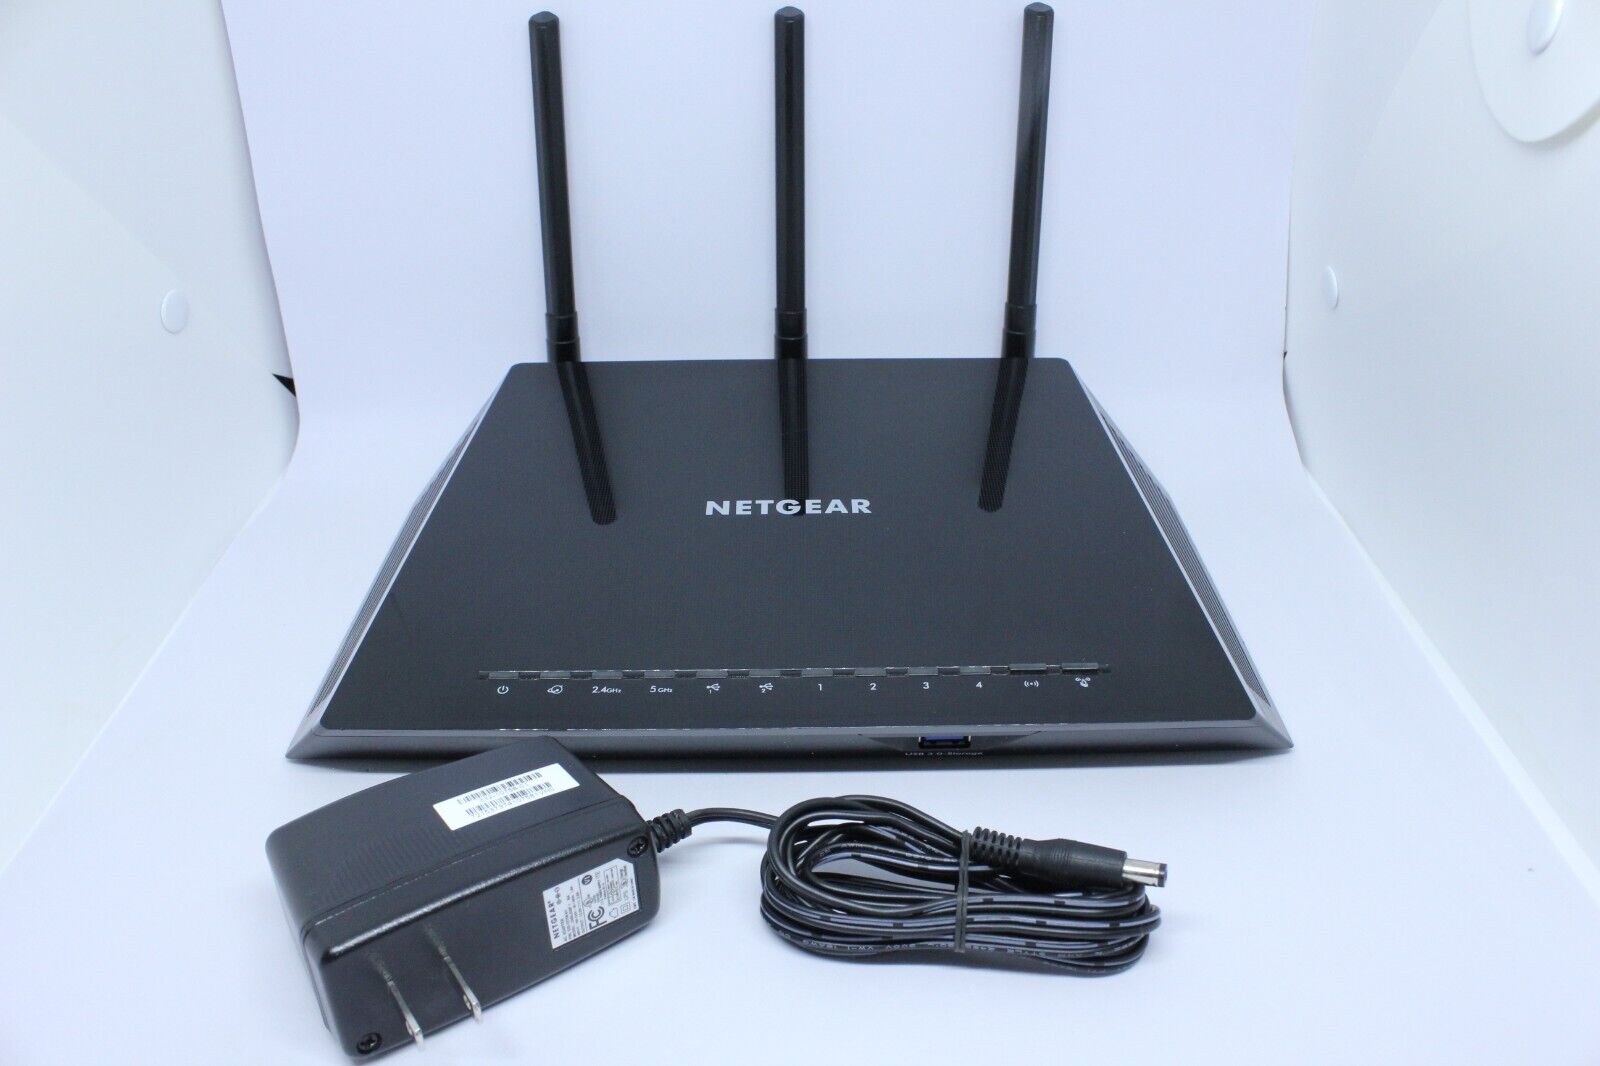 Netgear AC1750 R6400-100NAS 1300 Mbps 4-Port Gigabit Wireless AC Router